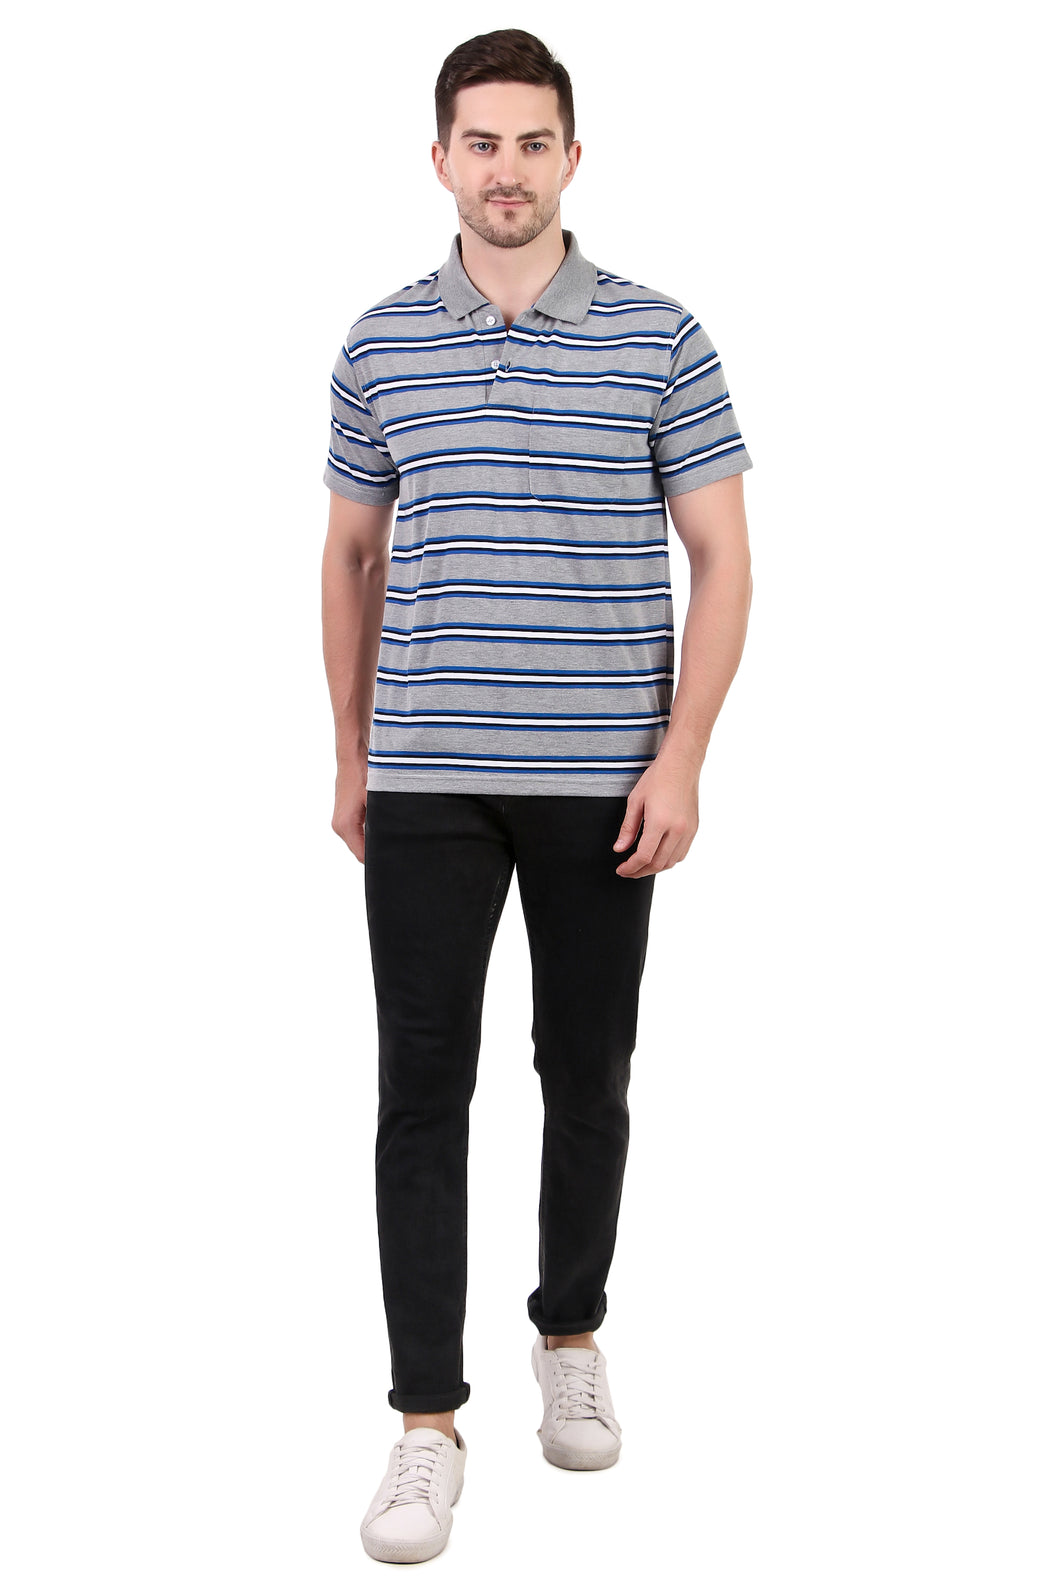 Striper T-shirt with Pocket